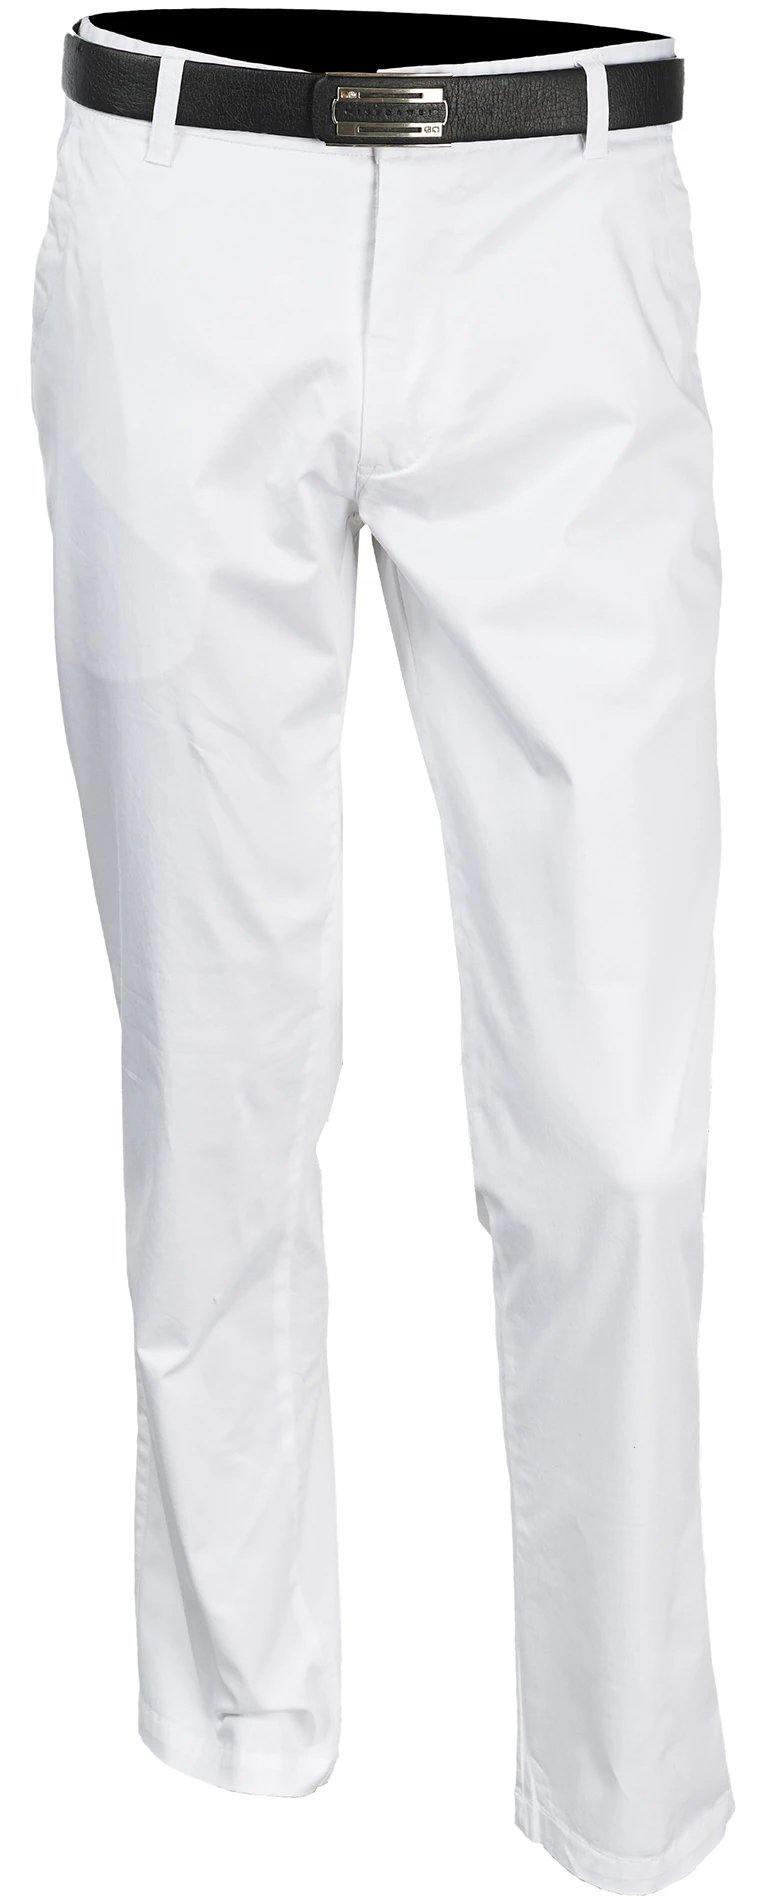 Men's Chino Casual Pants color White - Upscale Men's Fashion